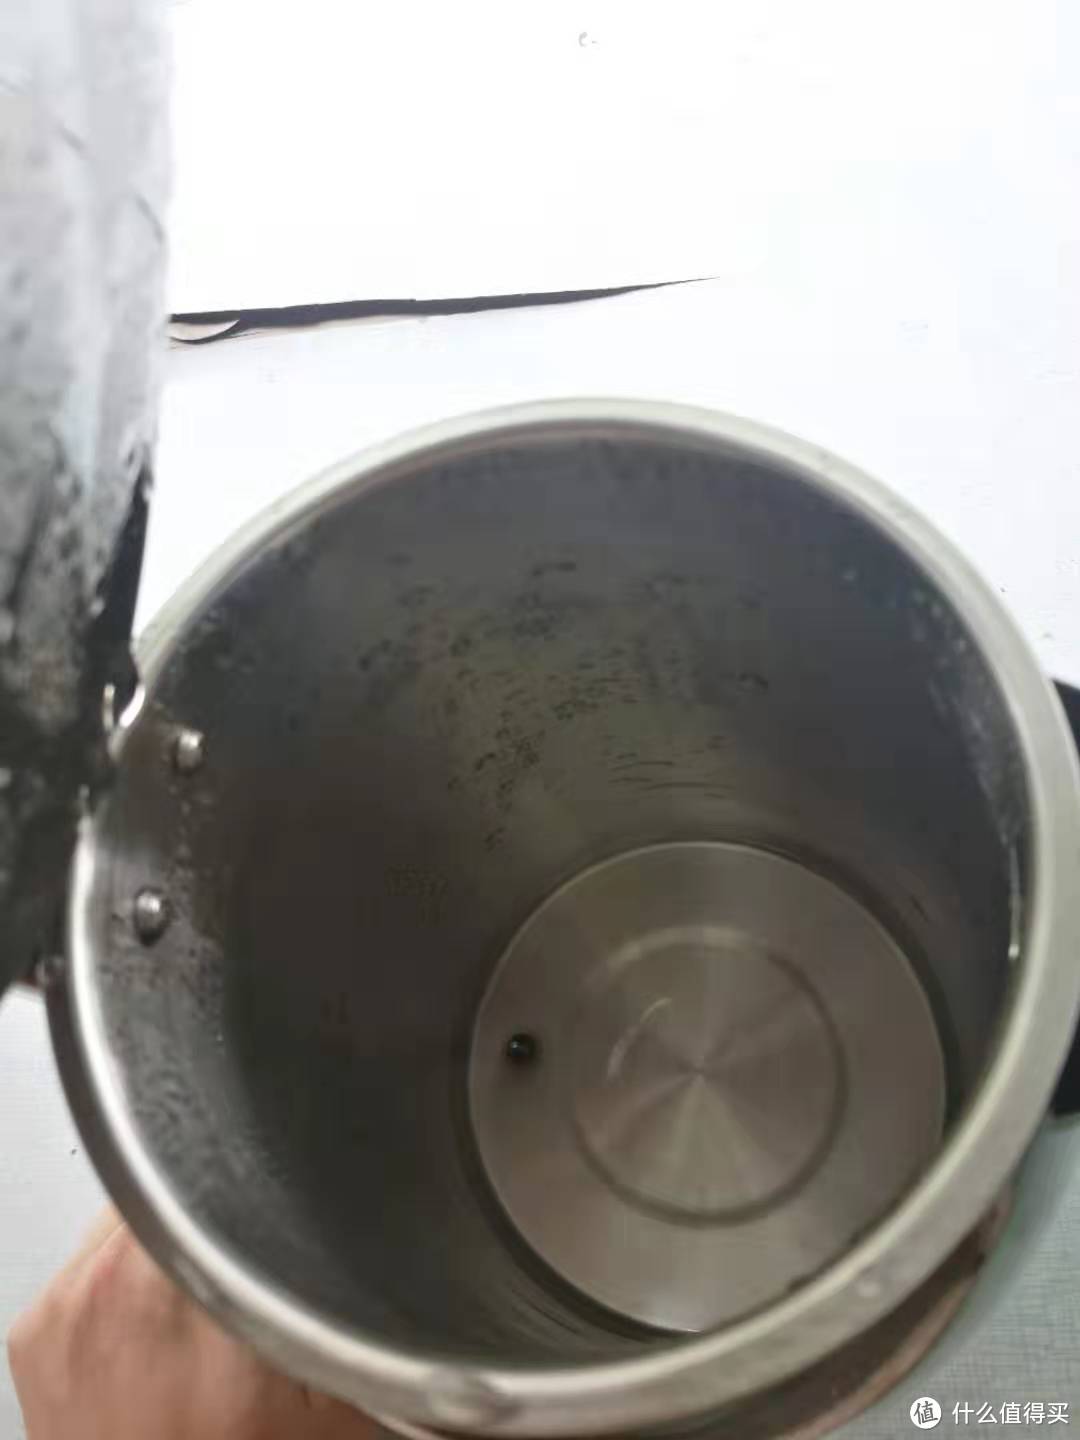 Strix温控、快热、小巧一应俱全——苏泊尔SWF17E16C电热水壶开箱